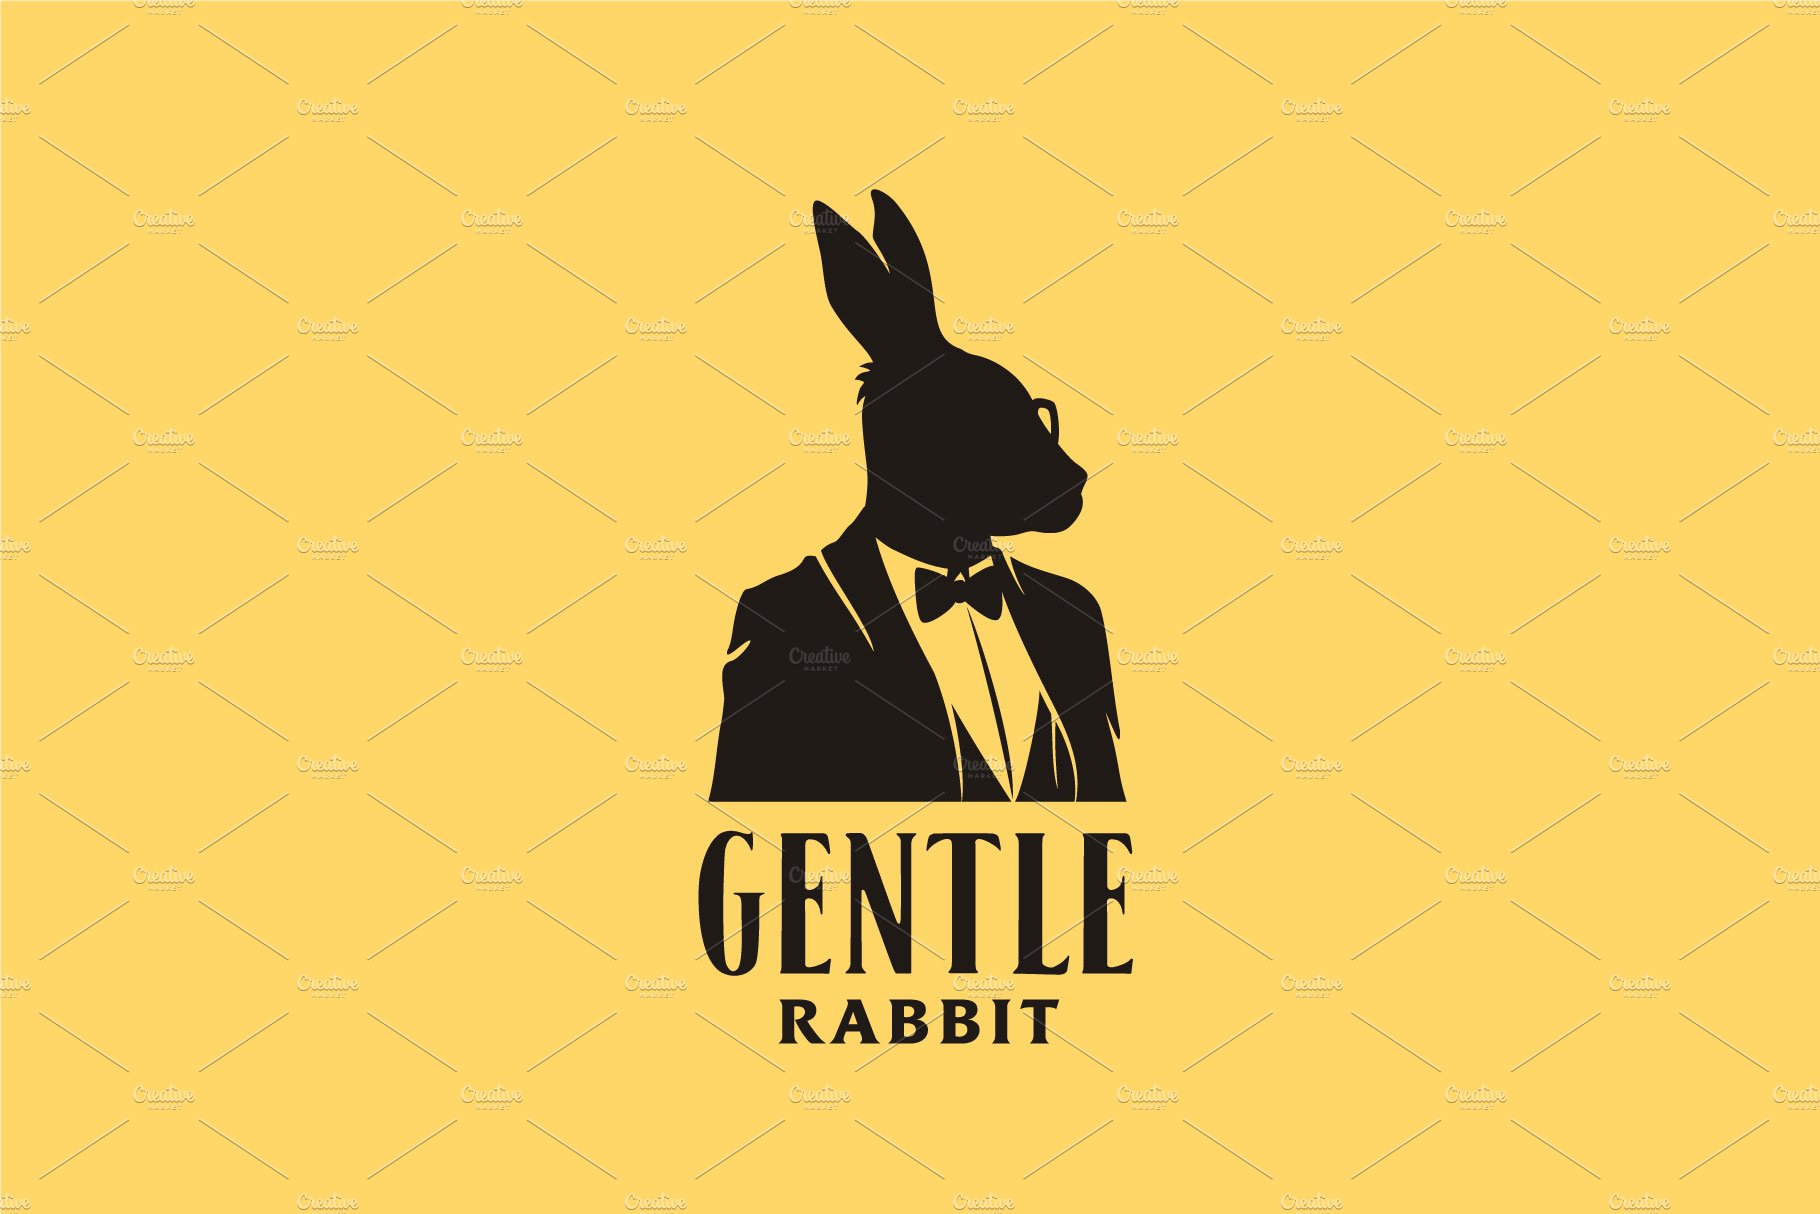 Rabbit businessman silhouette logo cover image.